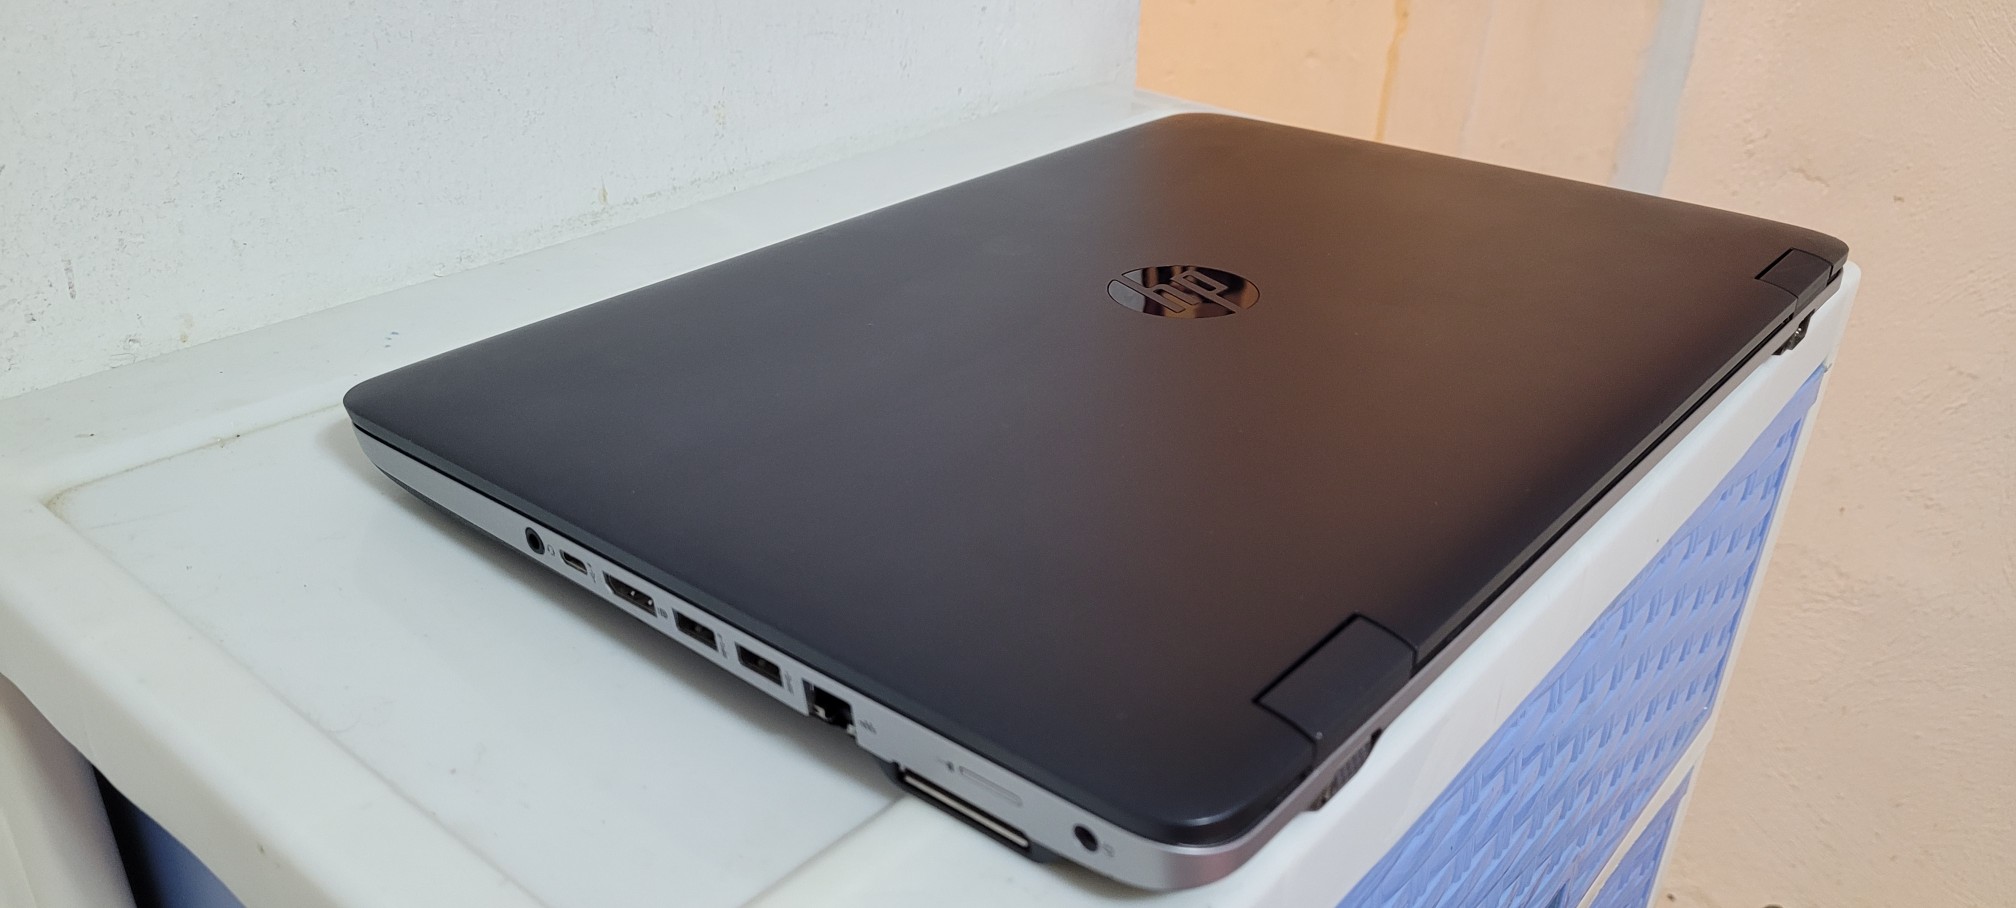 computadoras y laptops - laptop hp 17 Pulg Core i5 6ta Gen Ram 8gb ddr4 Disco SSD Solido 2